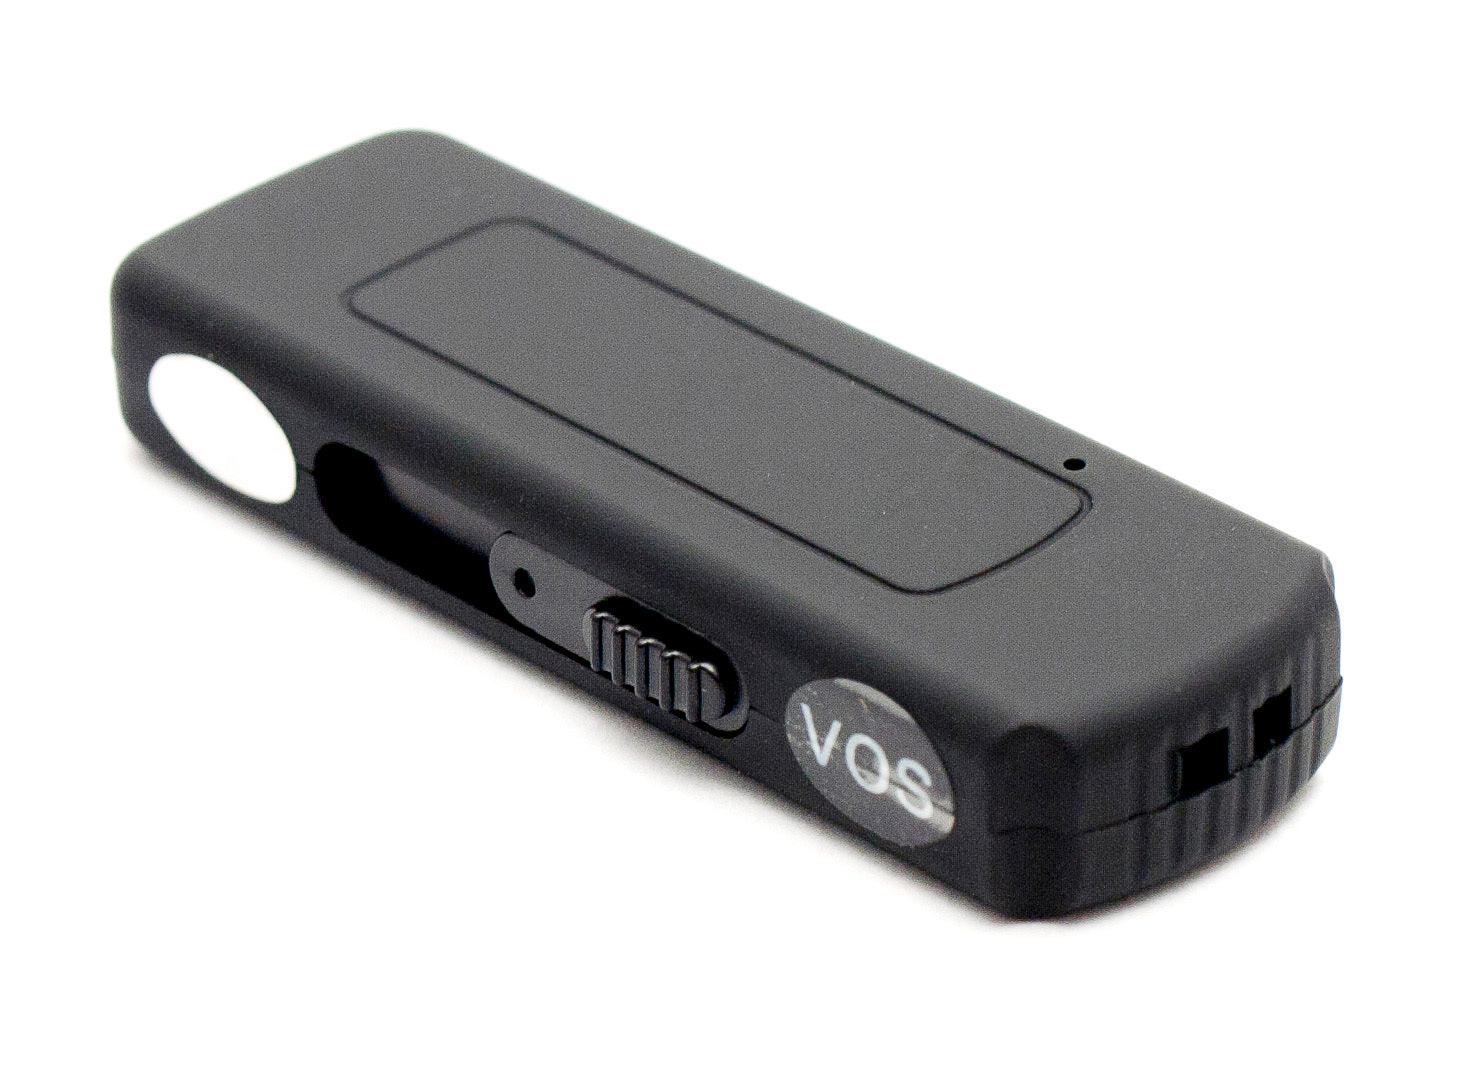 VAUSB: Voice Recorder USB